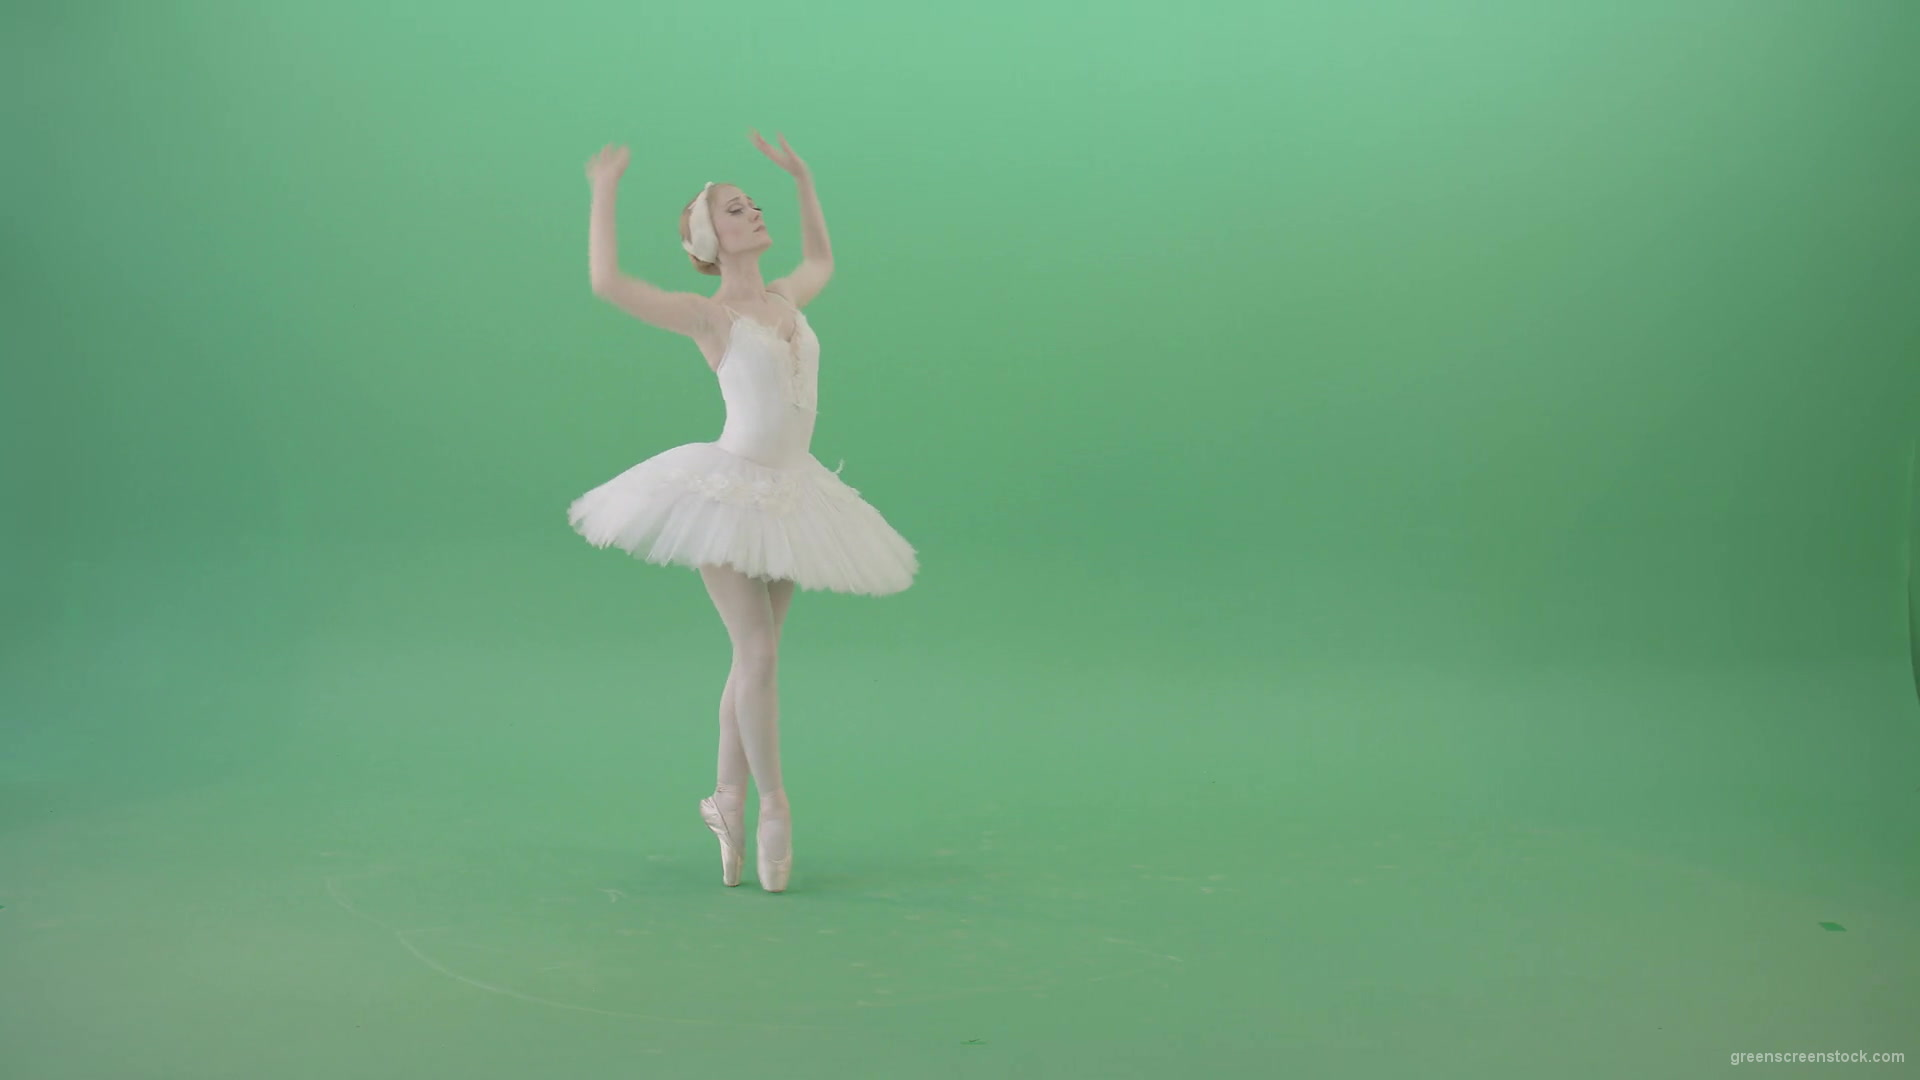 vj video background Flying-swan-laken-ballerina-dancing-with-light-on-green-screen-chroma-key-4K-Video-Footage-1920_003